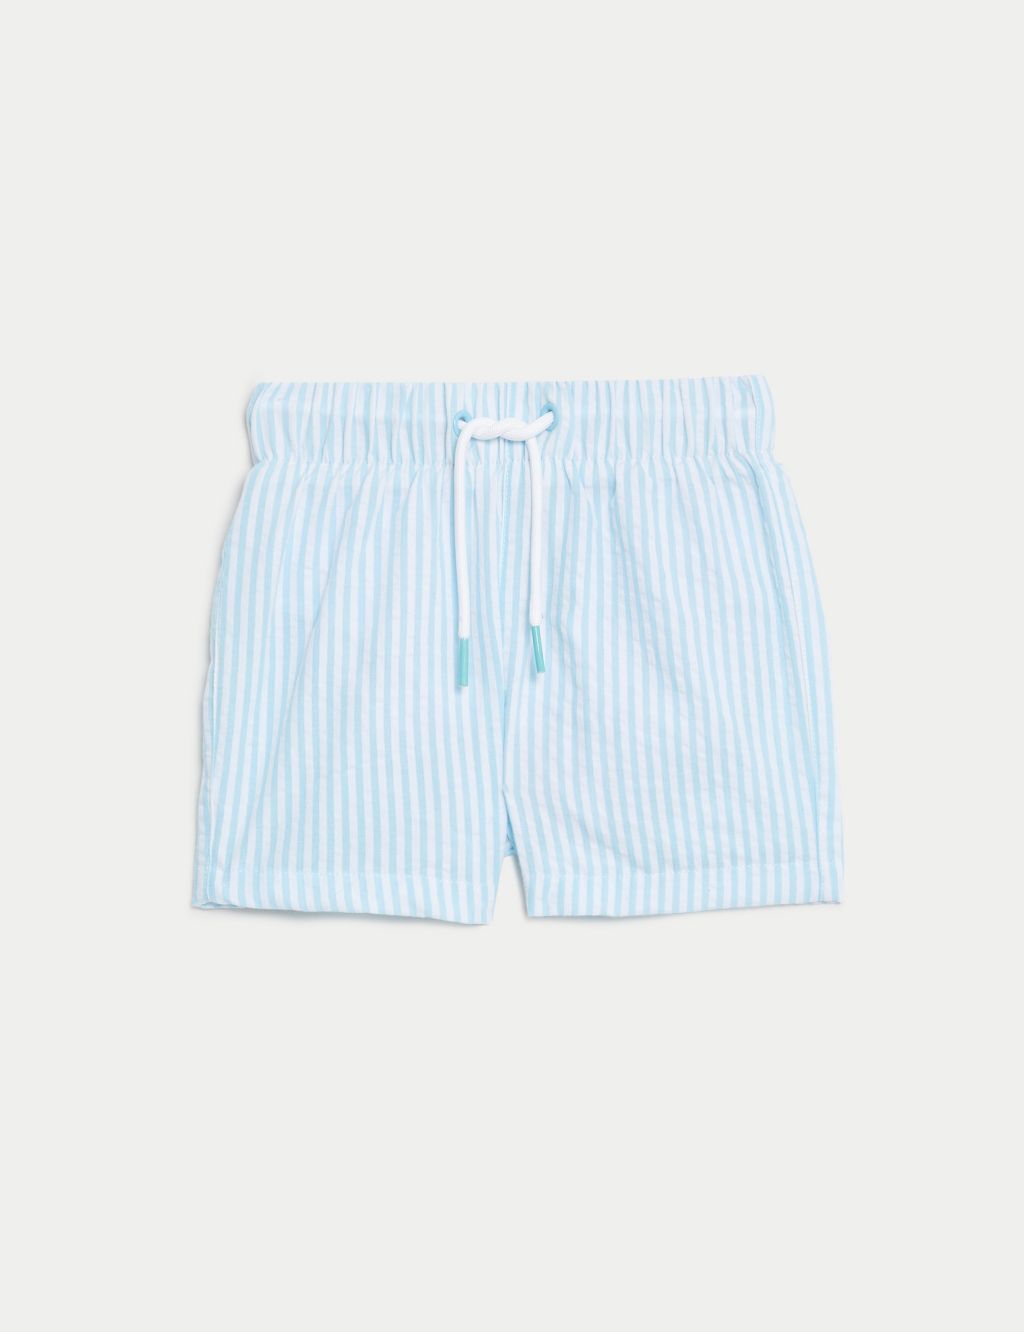 Striped Swim Shorts (0-3 Yrs) image 1